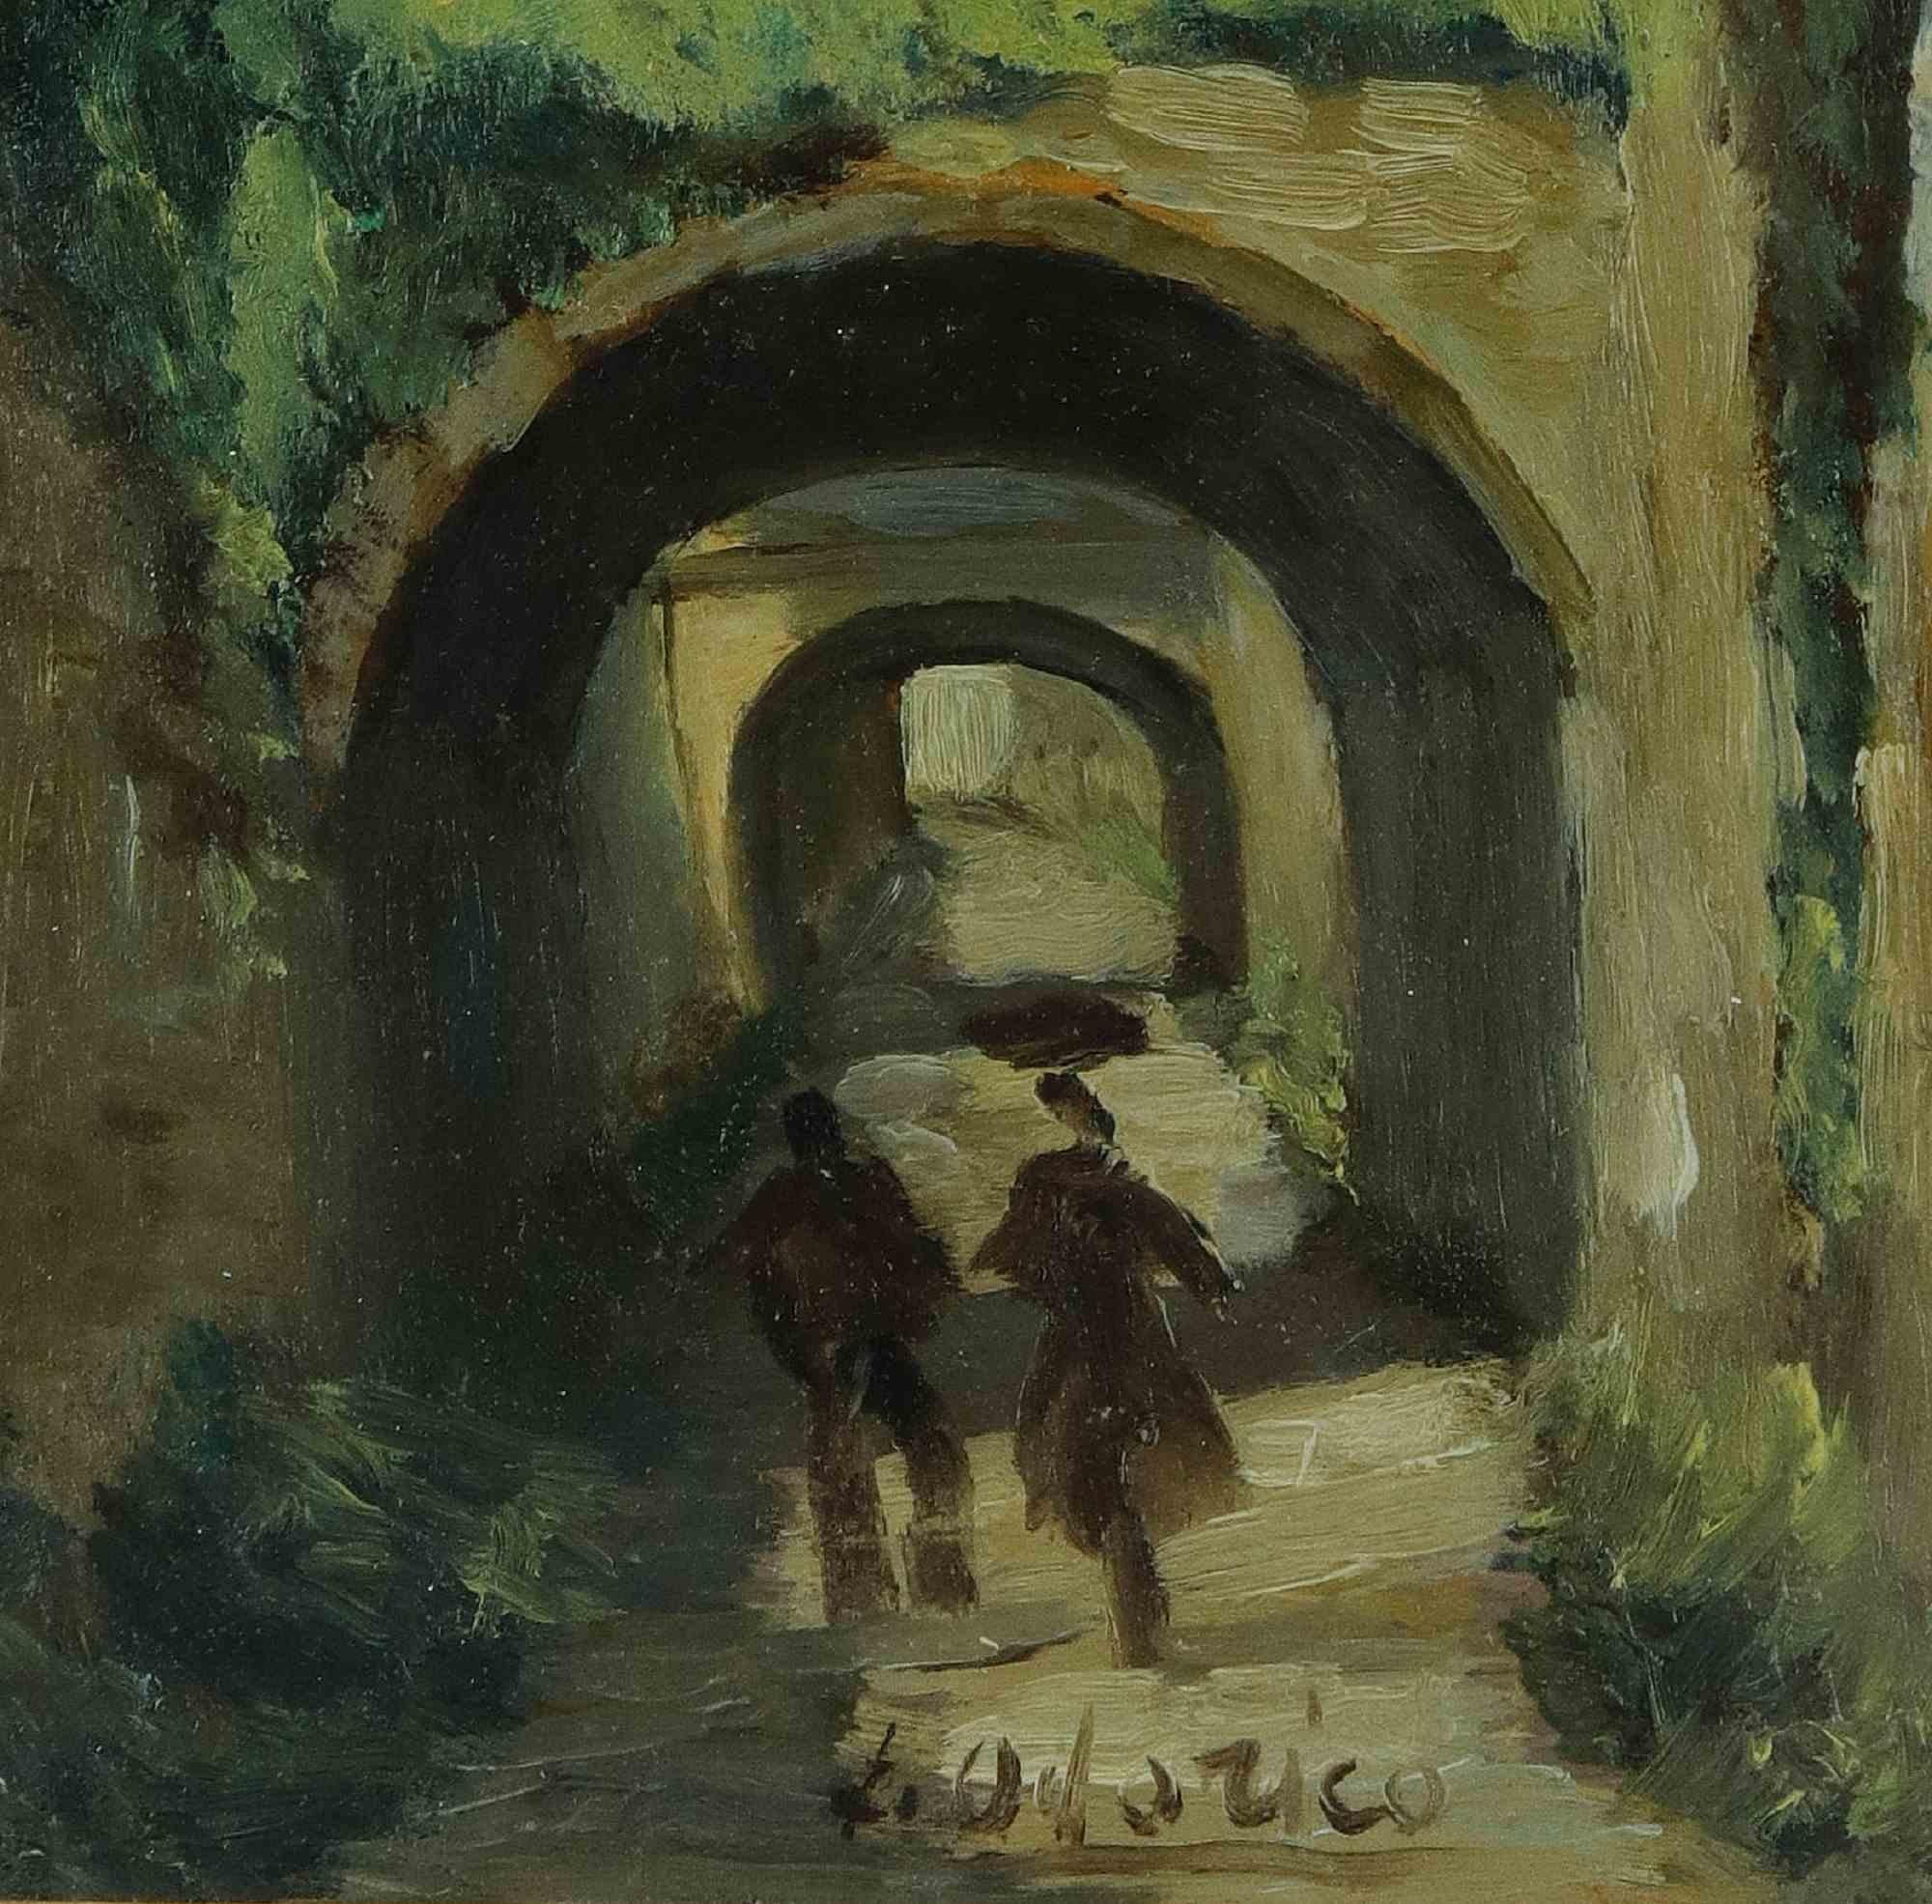 Into the tunnel - Peinture à l'huile d'Isidore Odorico - Début du 20e siècle - Moderne Painting par  Isidore Odorico